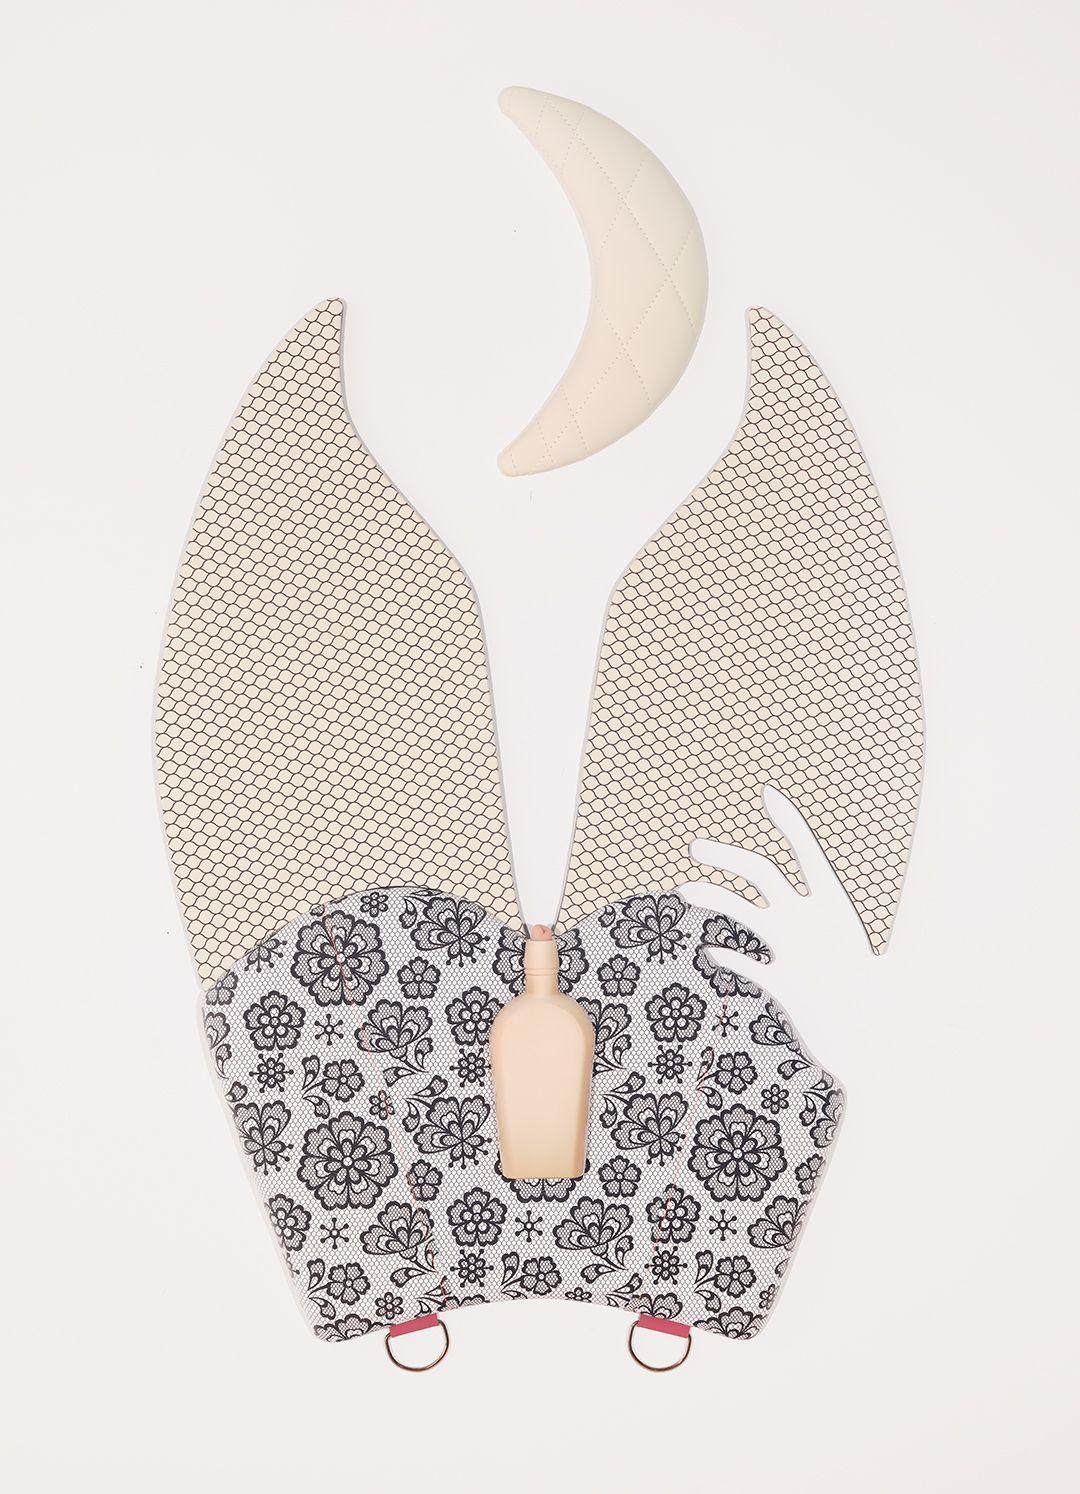 Trish Tillman: Grooming Kit | Trish Tillman | Asya Geisberg Gallery